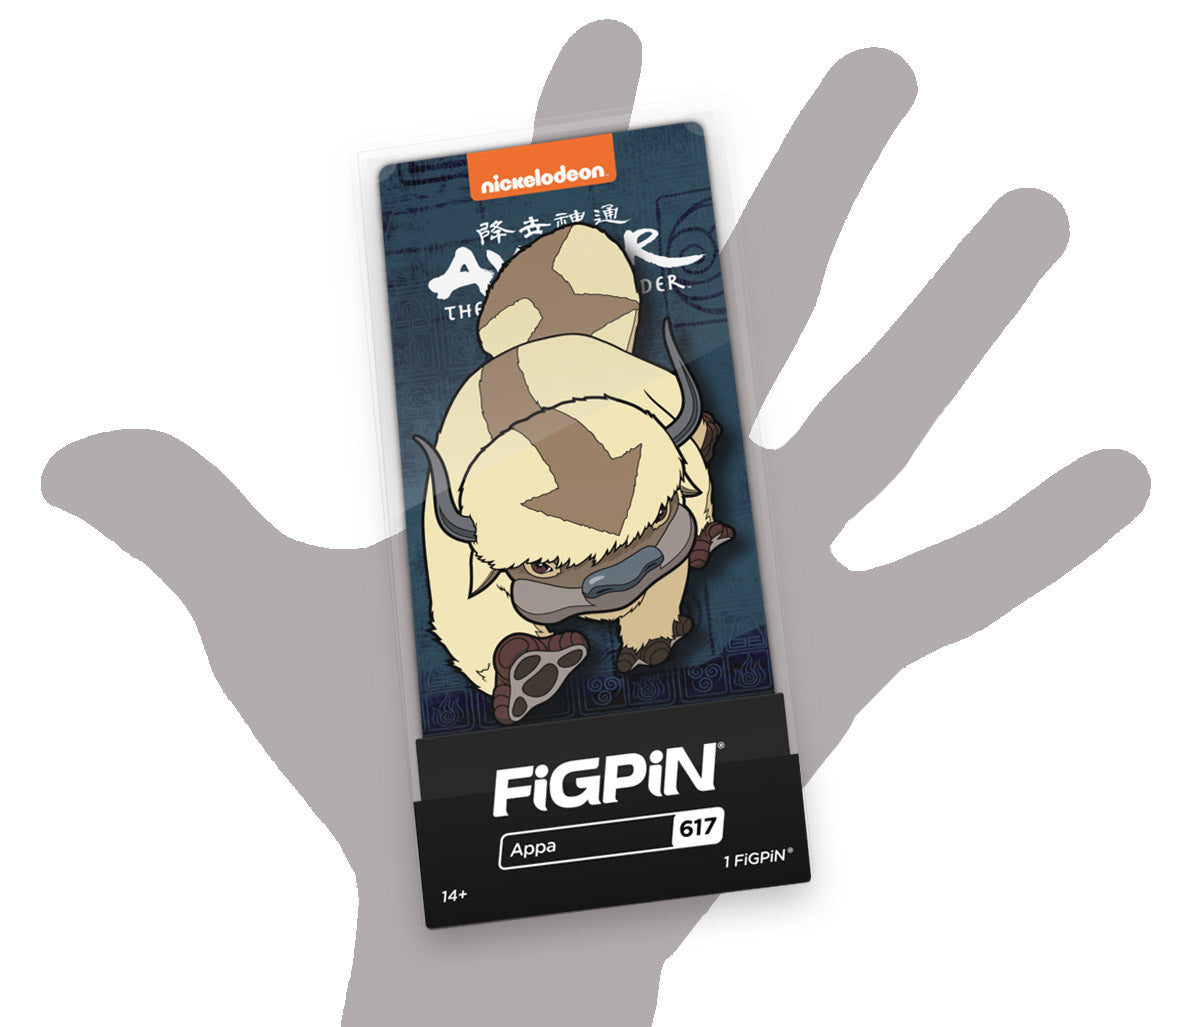 FiGPiN Appa (617) Collectable Enamel Pin MK39N1EKNV |27871|